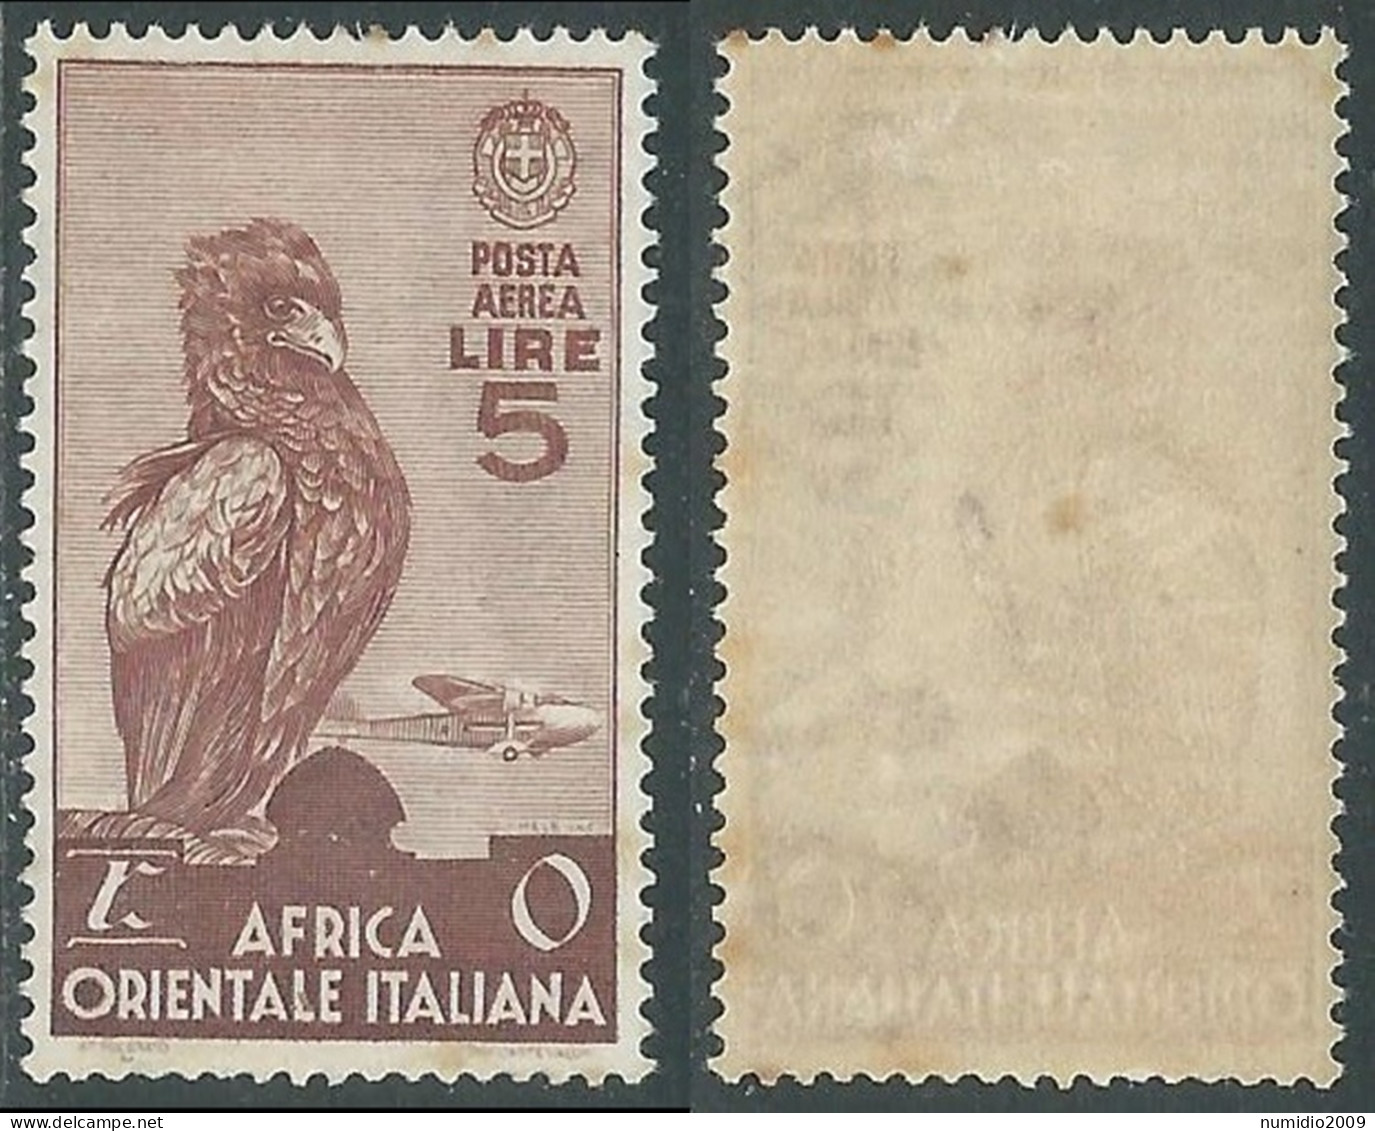 1938 AFRICA ORIENTALE ITALIANA POSTA AEREA 5 LIRE MACCHIE SU GOMMA MH * - I41 - Afrique Orientale Italienne